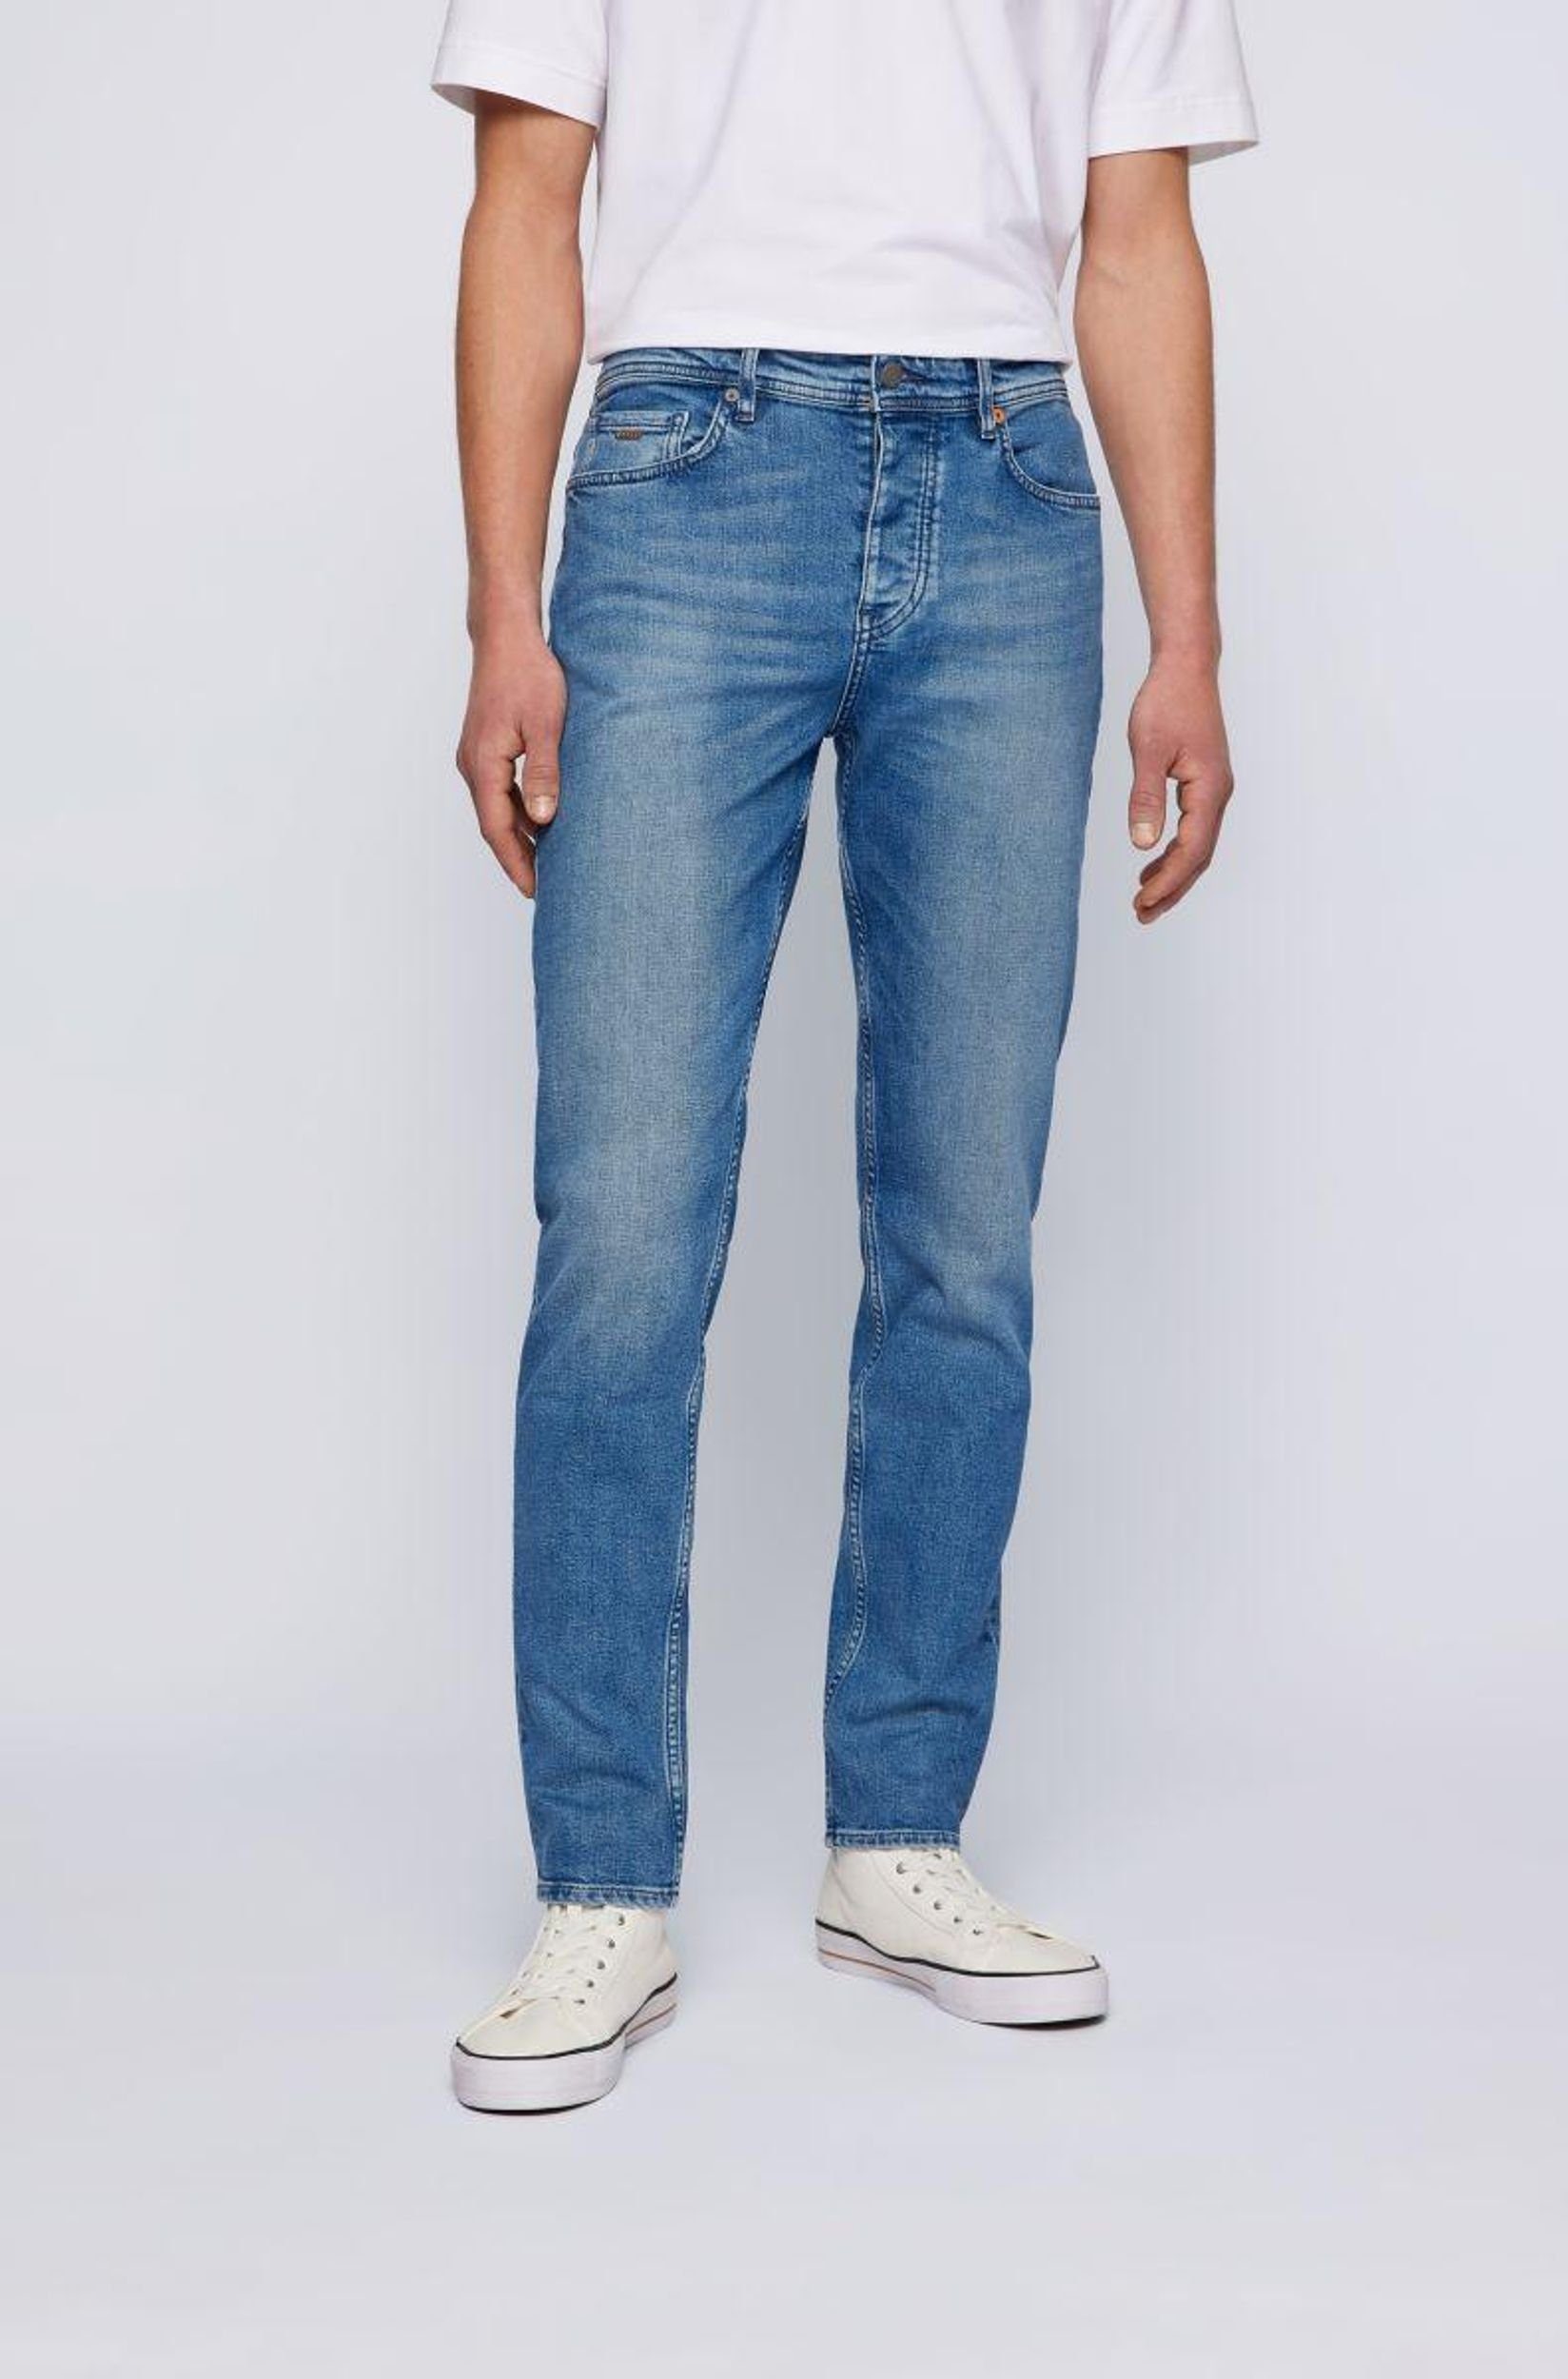 BOSS ORANGE AUS JEANS BLAUE Slim-fit-Jeans KOMFORTABLEM STRETCH-DENIM TAPERED-FIT